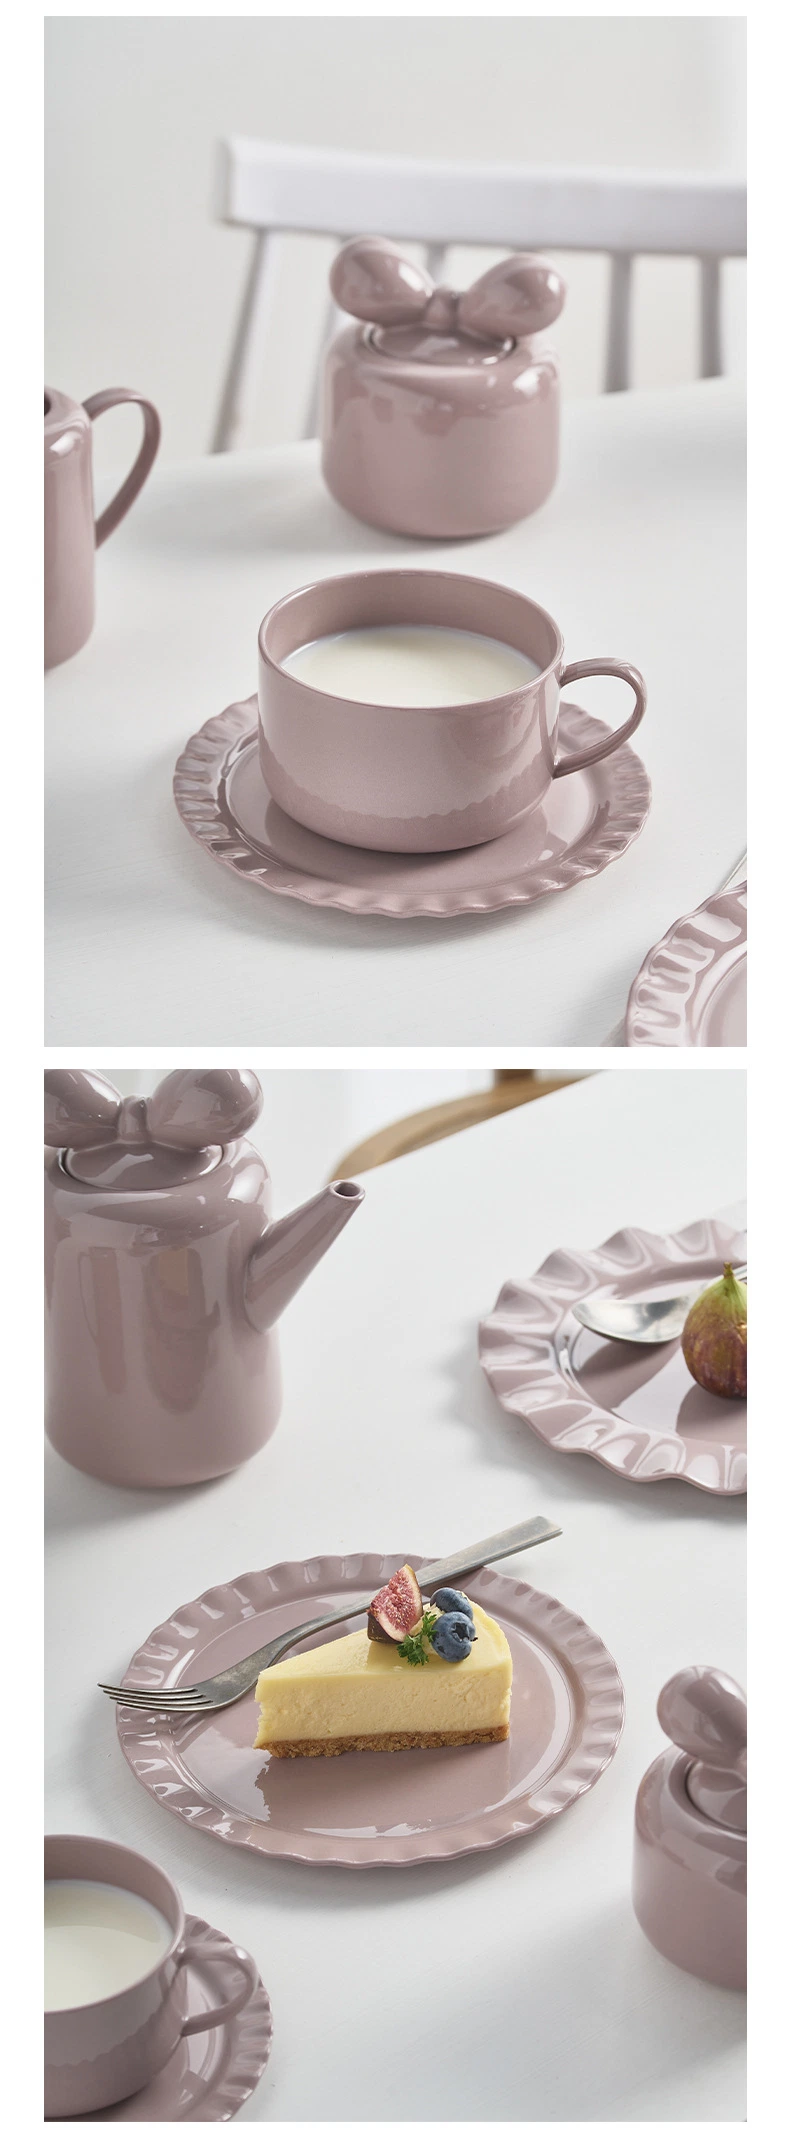 Candy Color Glaze Sugar Creamer Bowl Afternoon Tea Coffee Cups Pots Set